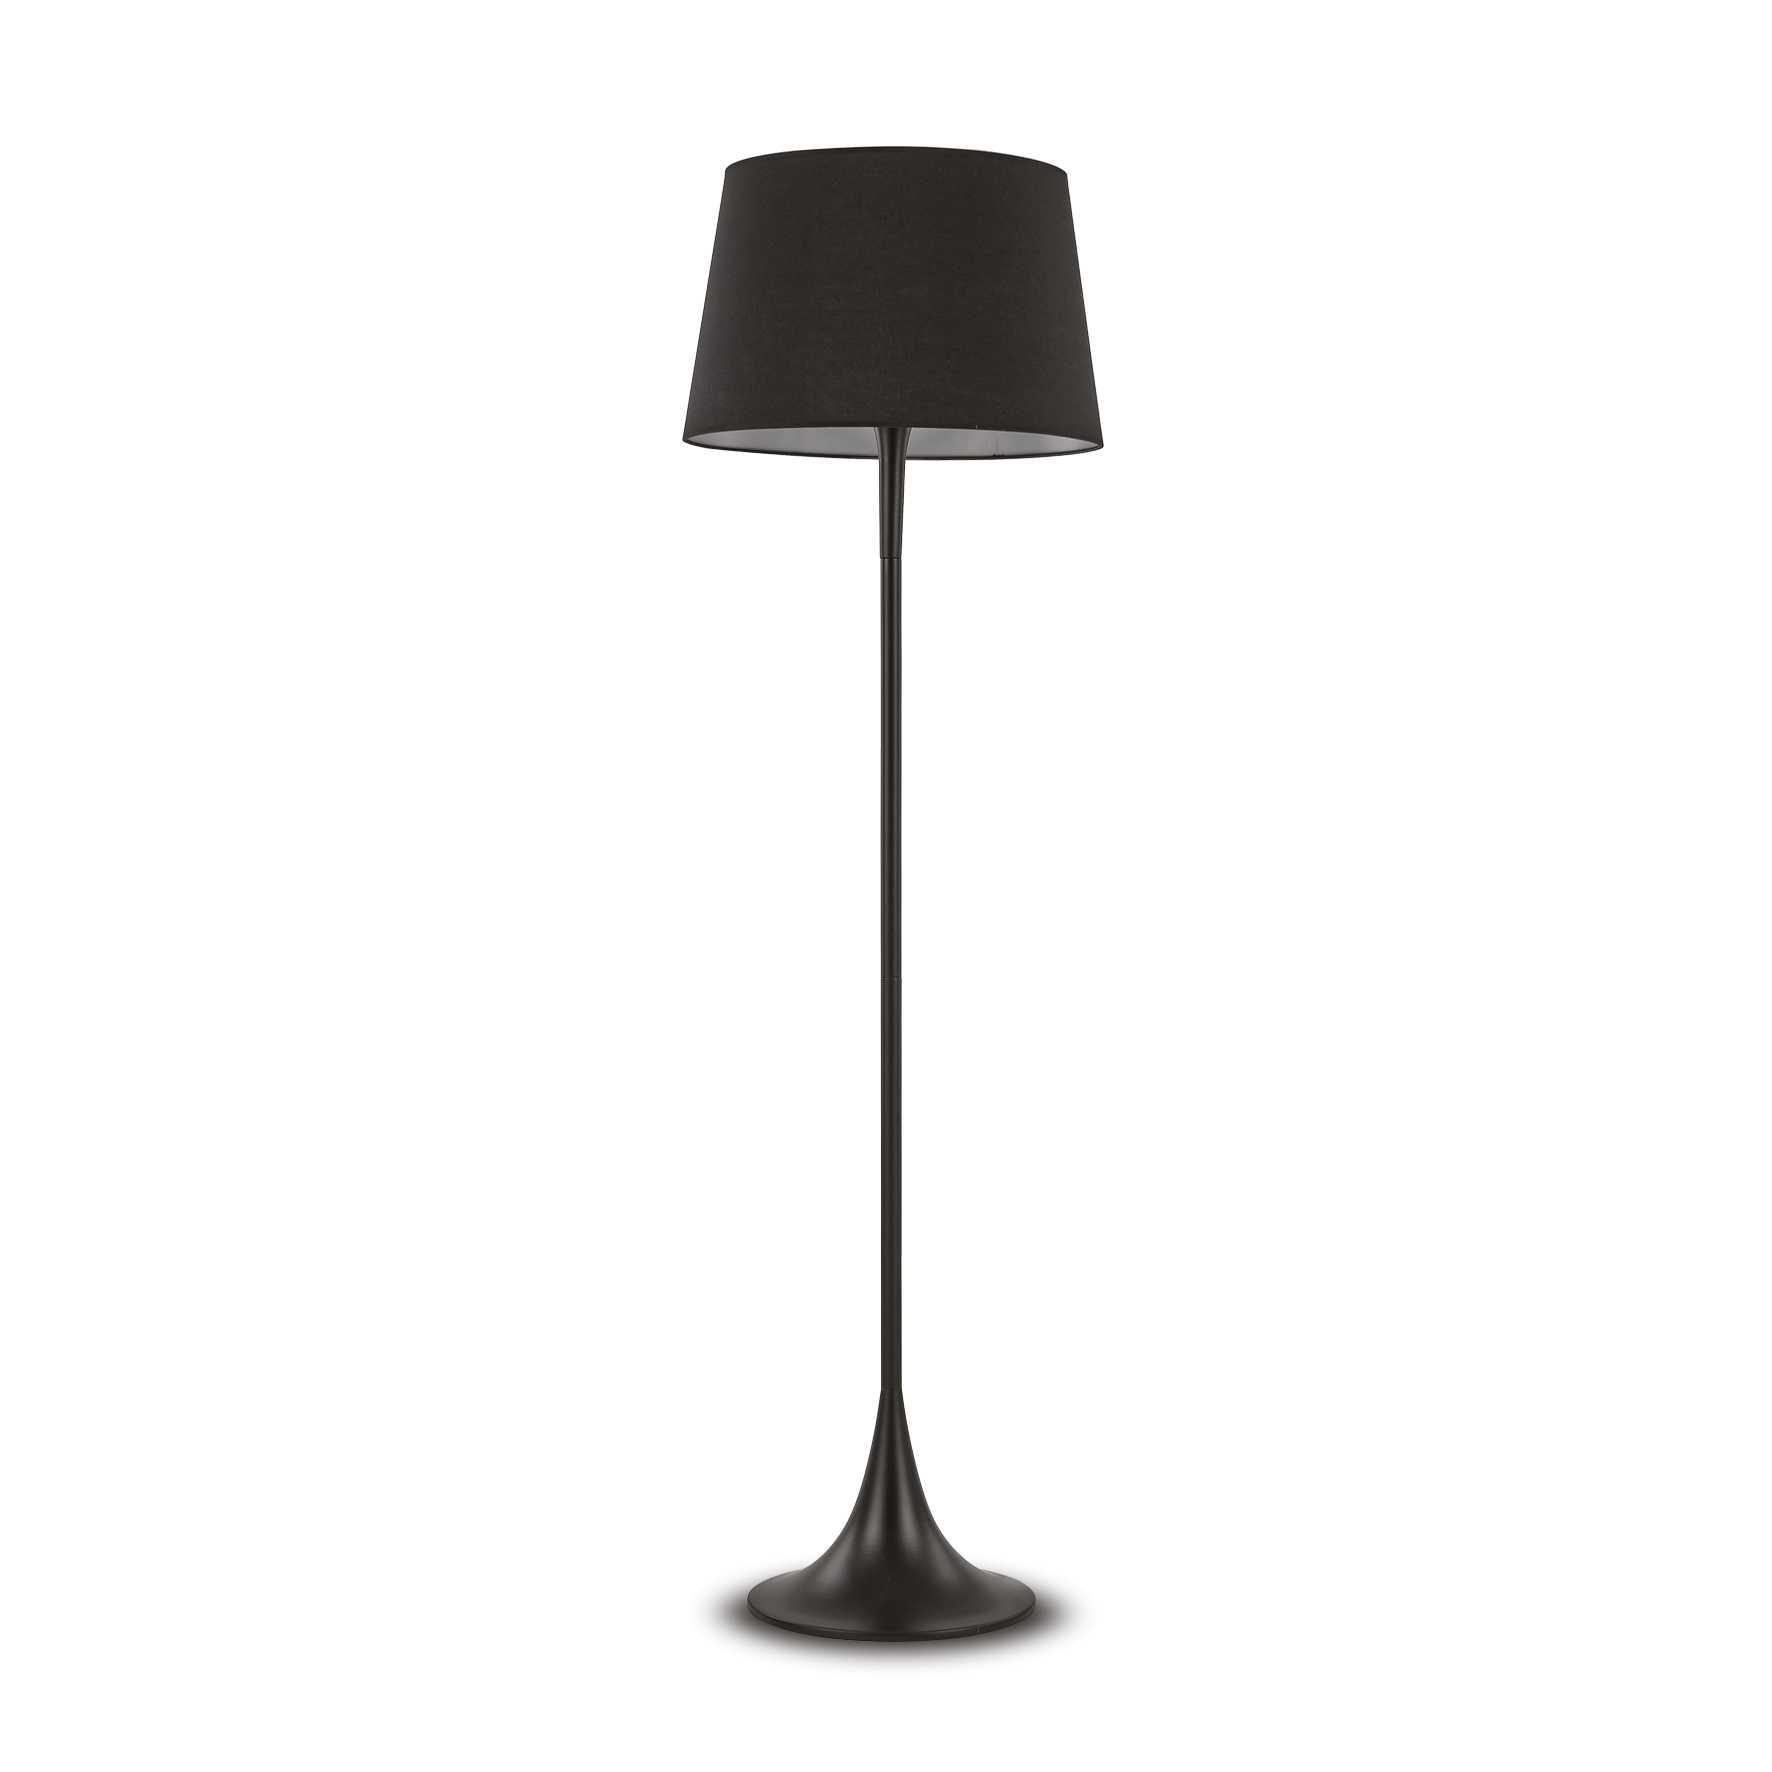 AD hotelska oprema Podna lampa London pt1- Crne boje slika proizvoda